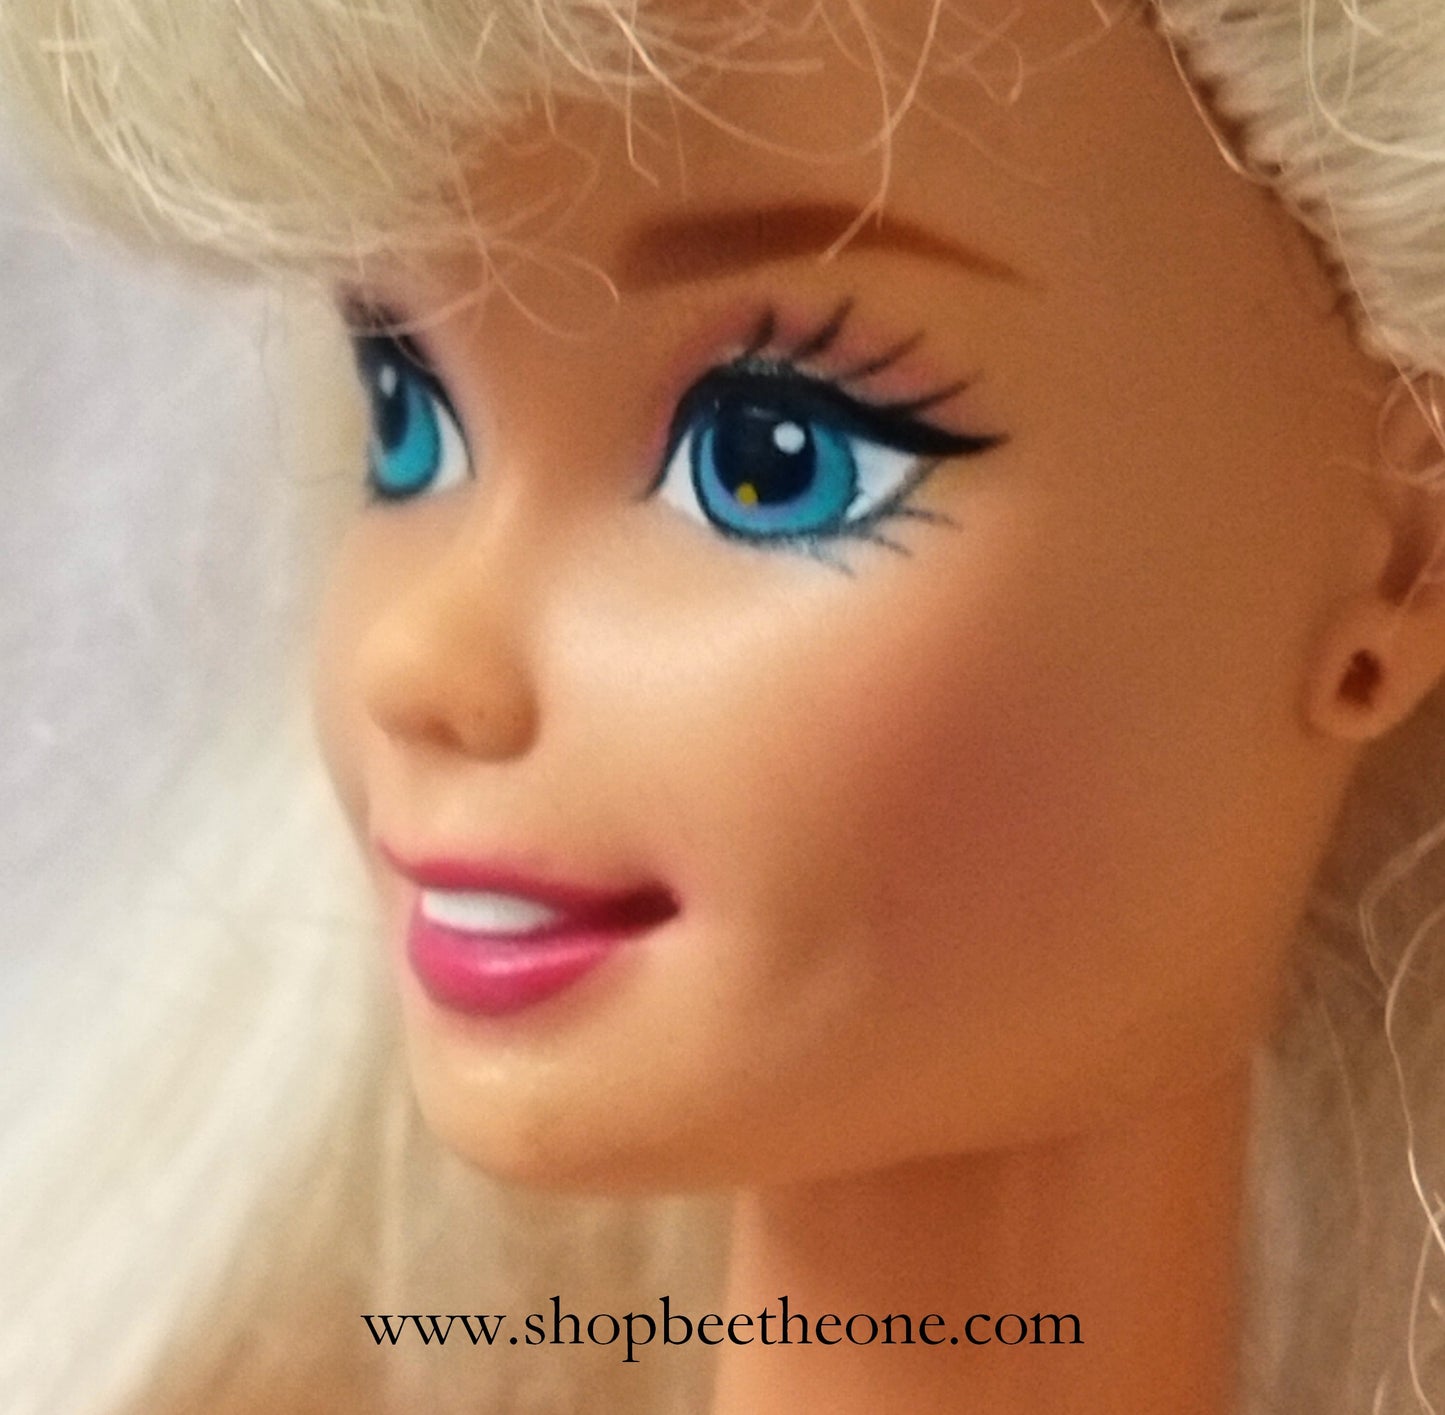 Barbie Jewel Hair Mermaid - Mattel 1995 - Poupée